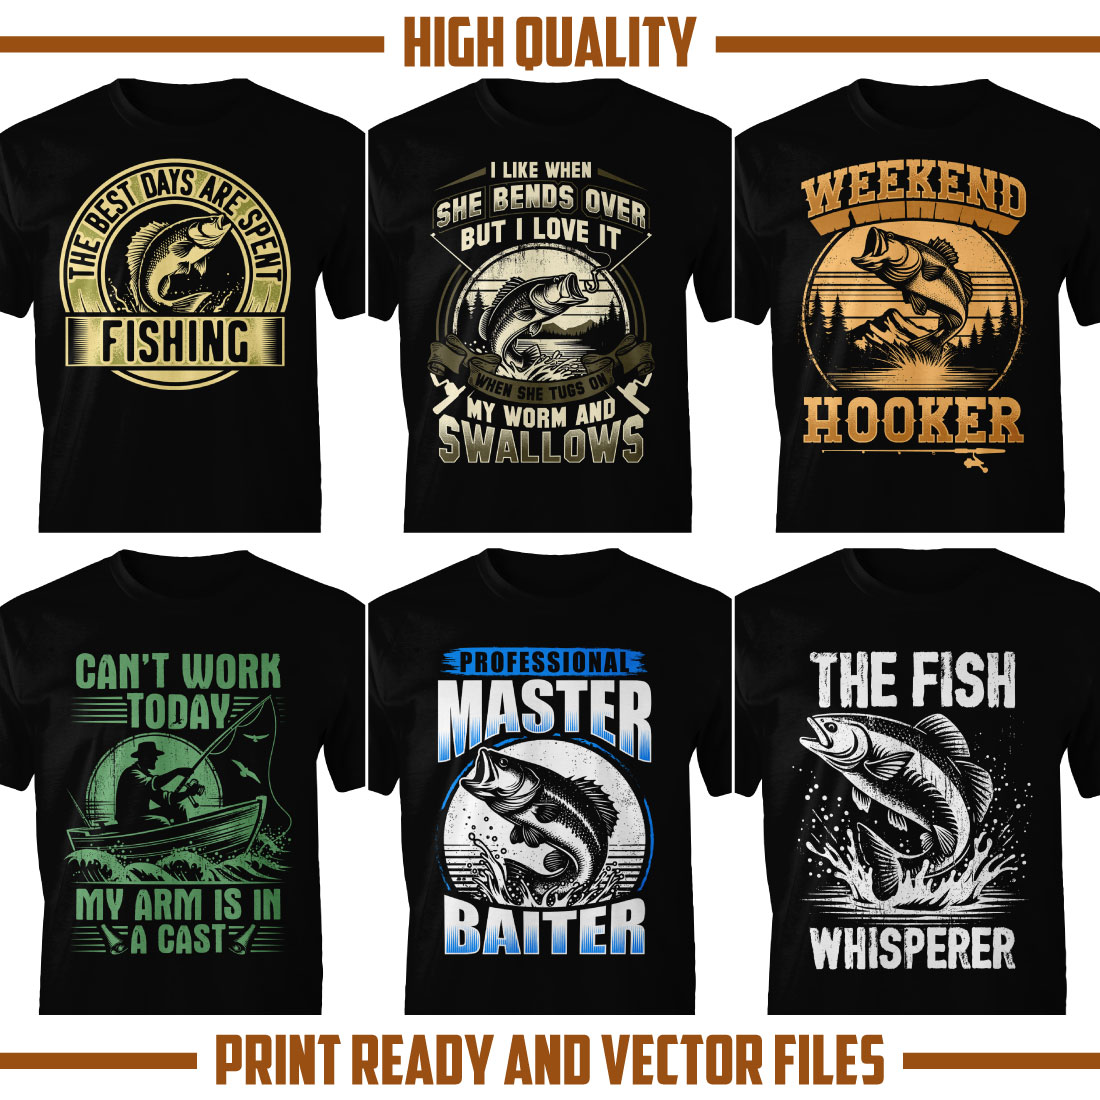 Hot selling fishing t shirt design bundle preview image.